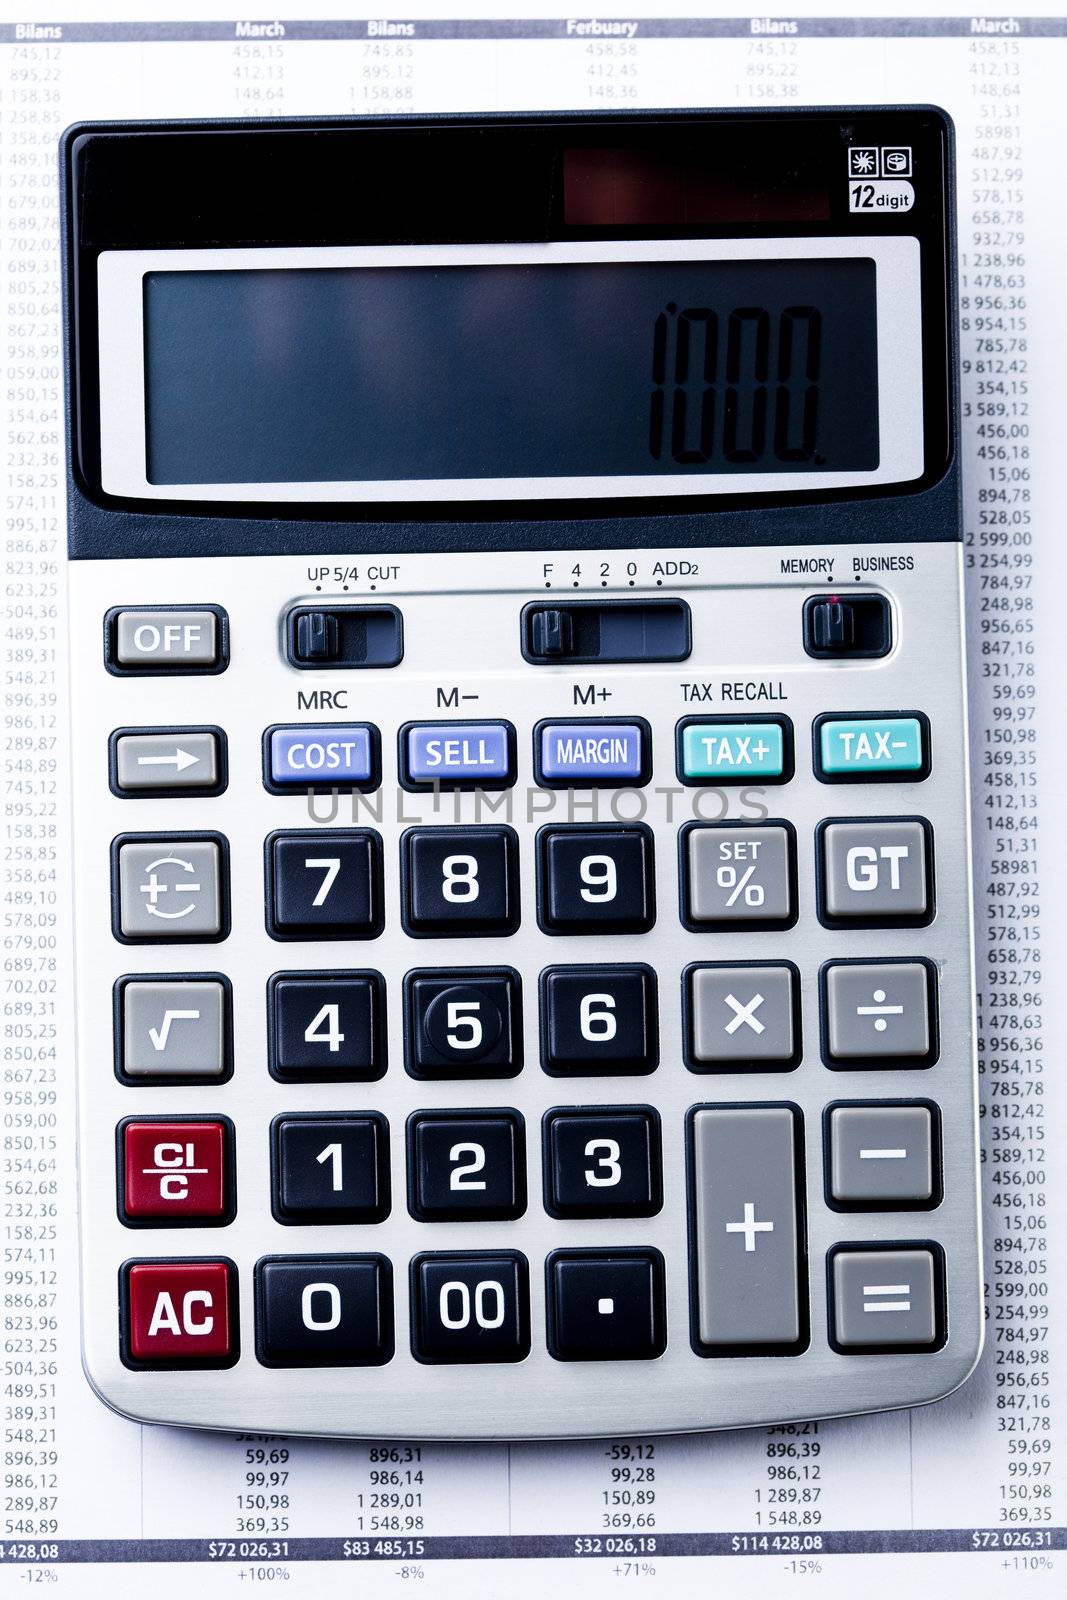 Calculator by JanPietruszka